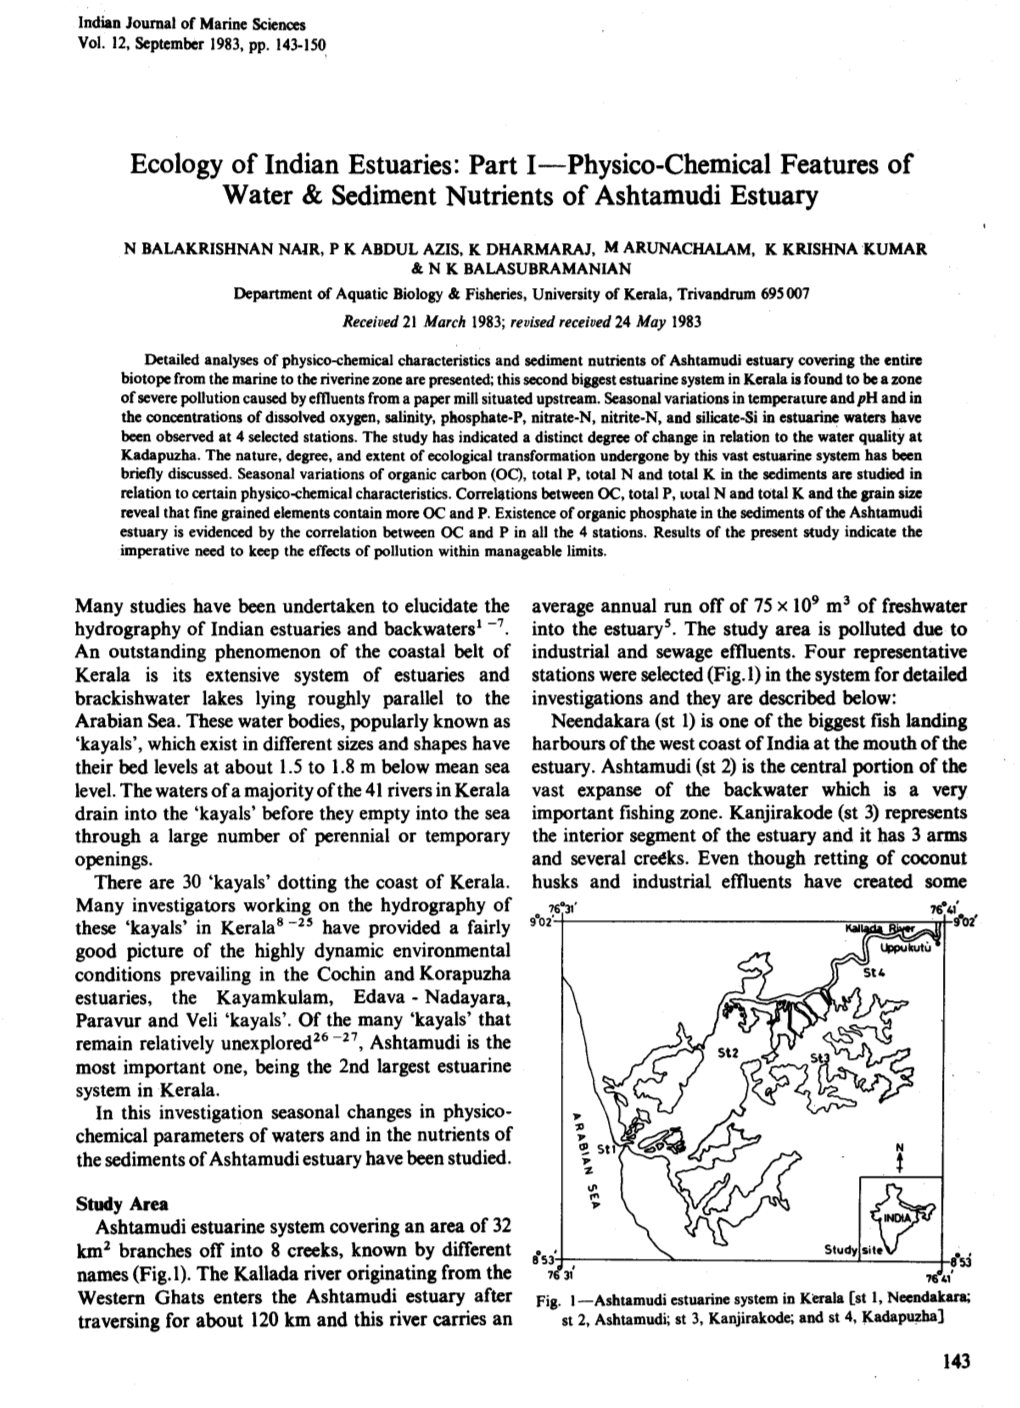 Ecology of Indian Estuaries: Part I-Physico-Chemical Features of Water & Sediment Nutrients of Ashtamudi Estuary